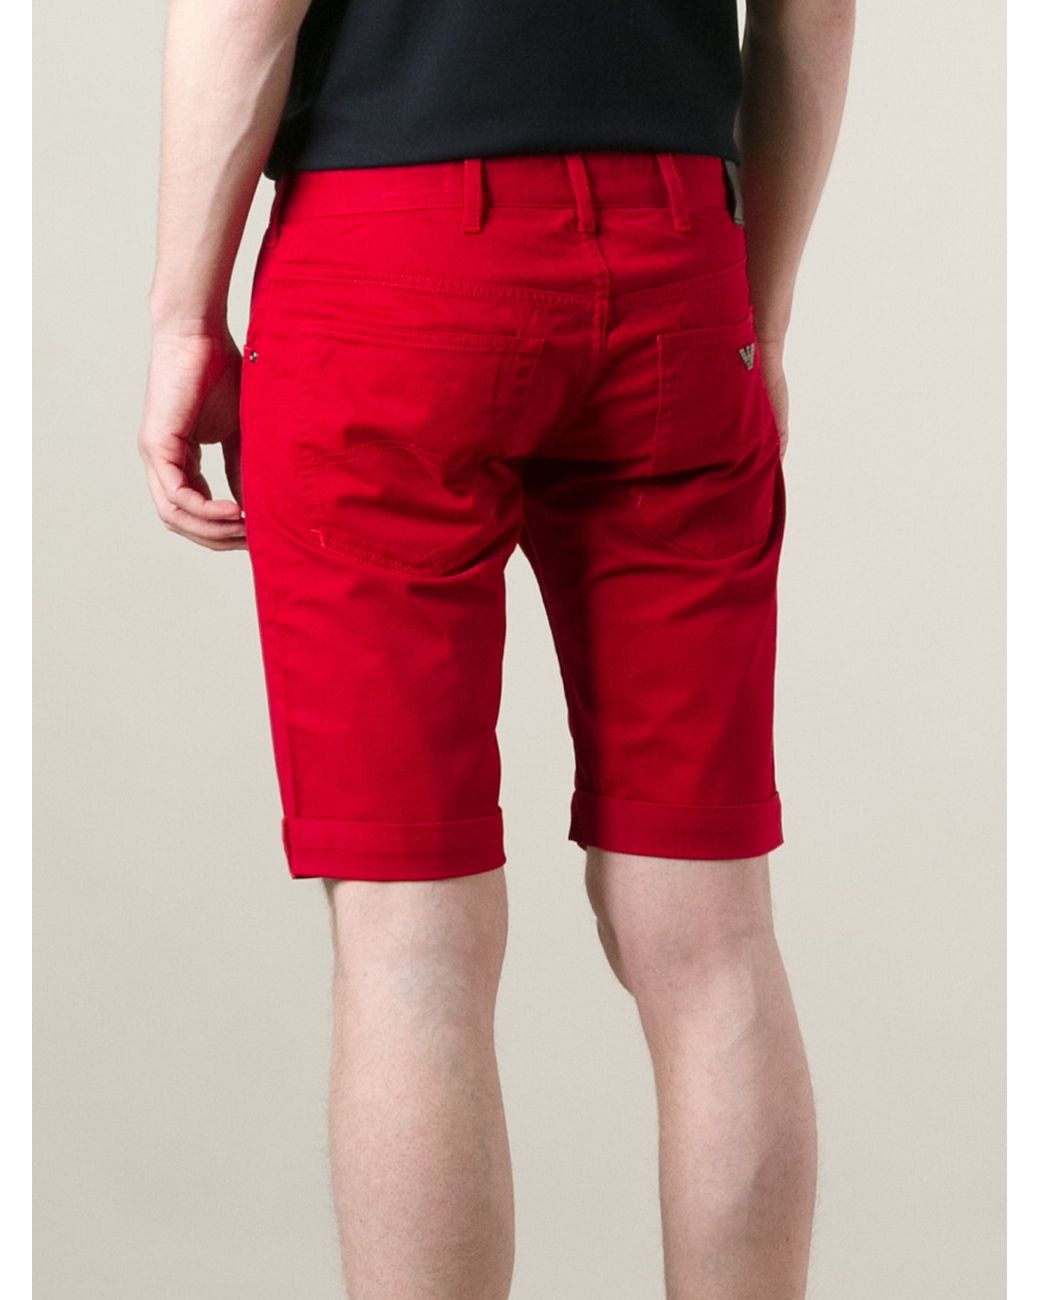 Discover 61+ armani jeans denim shorts